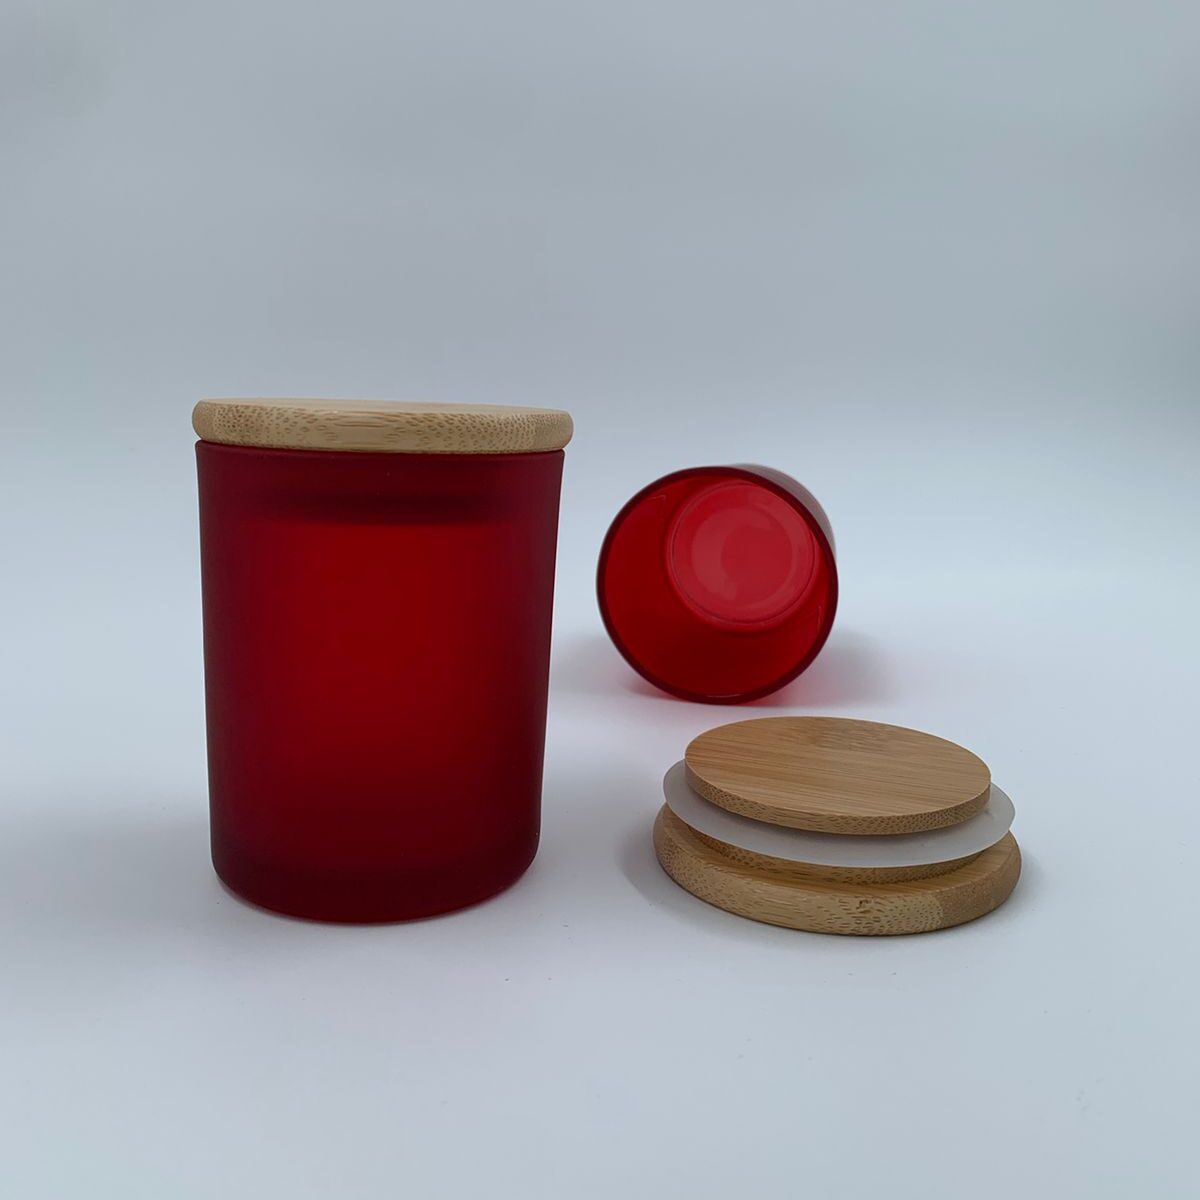 Матовый красный стакан 200 мл с бамбуковой крышкой с закруглённым краем